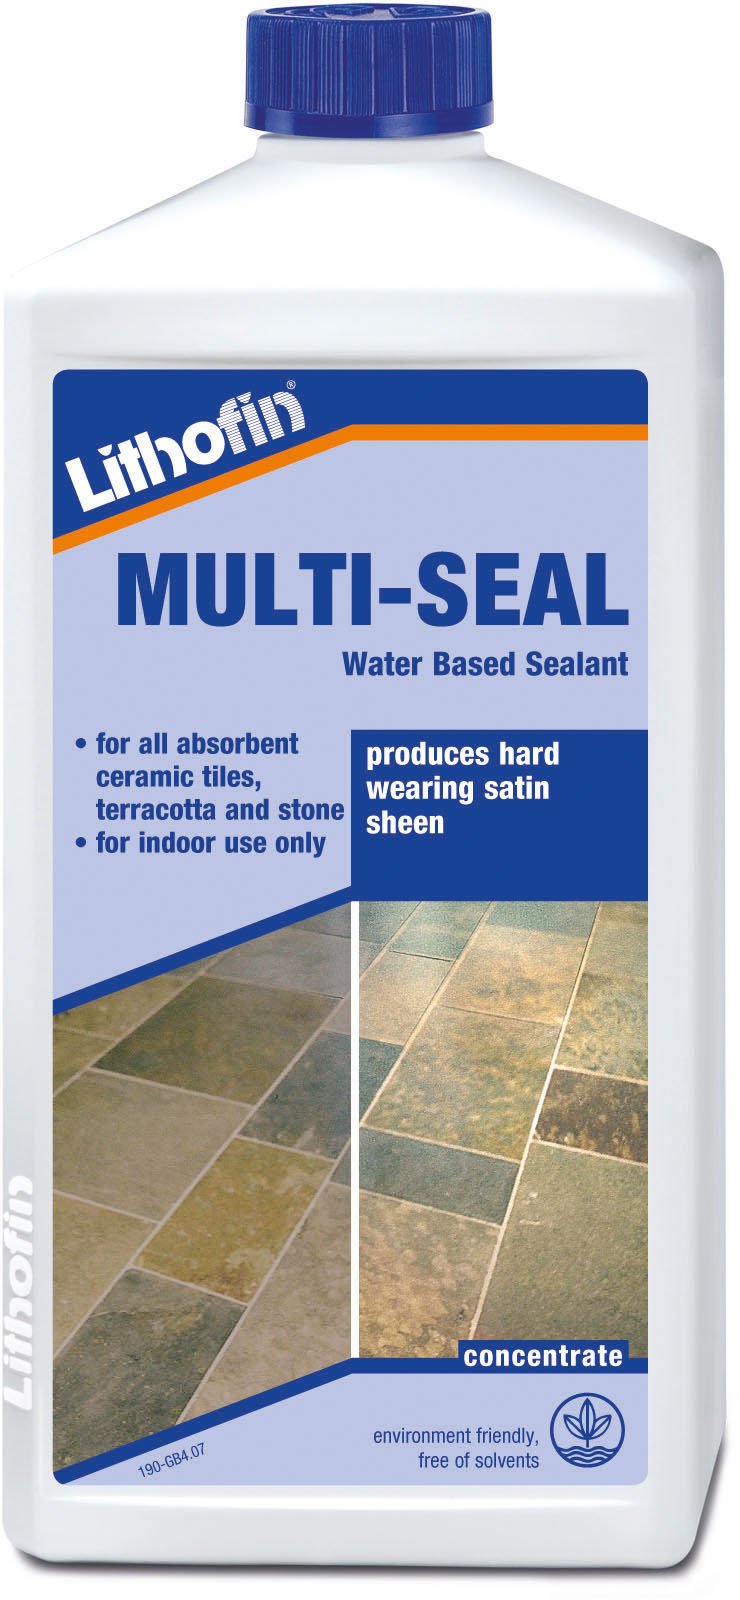 Lithofin multi seal water based sealant 